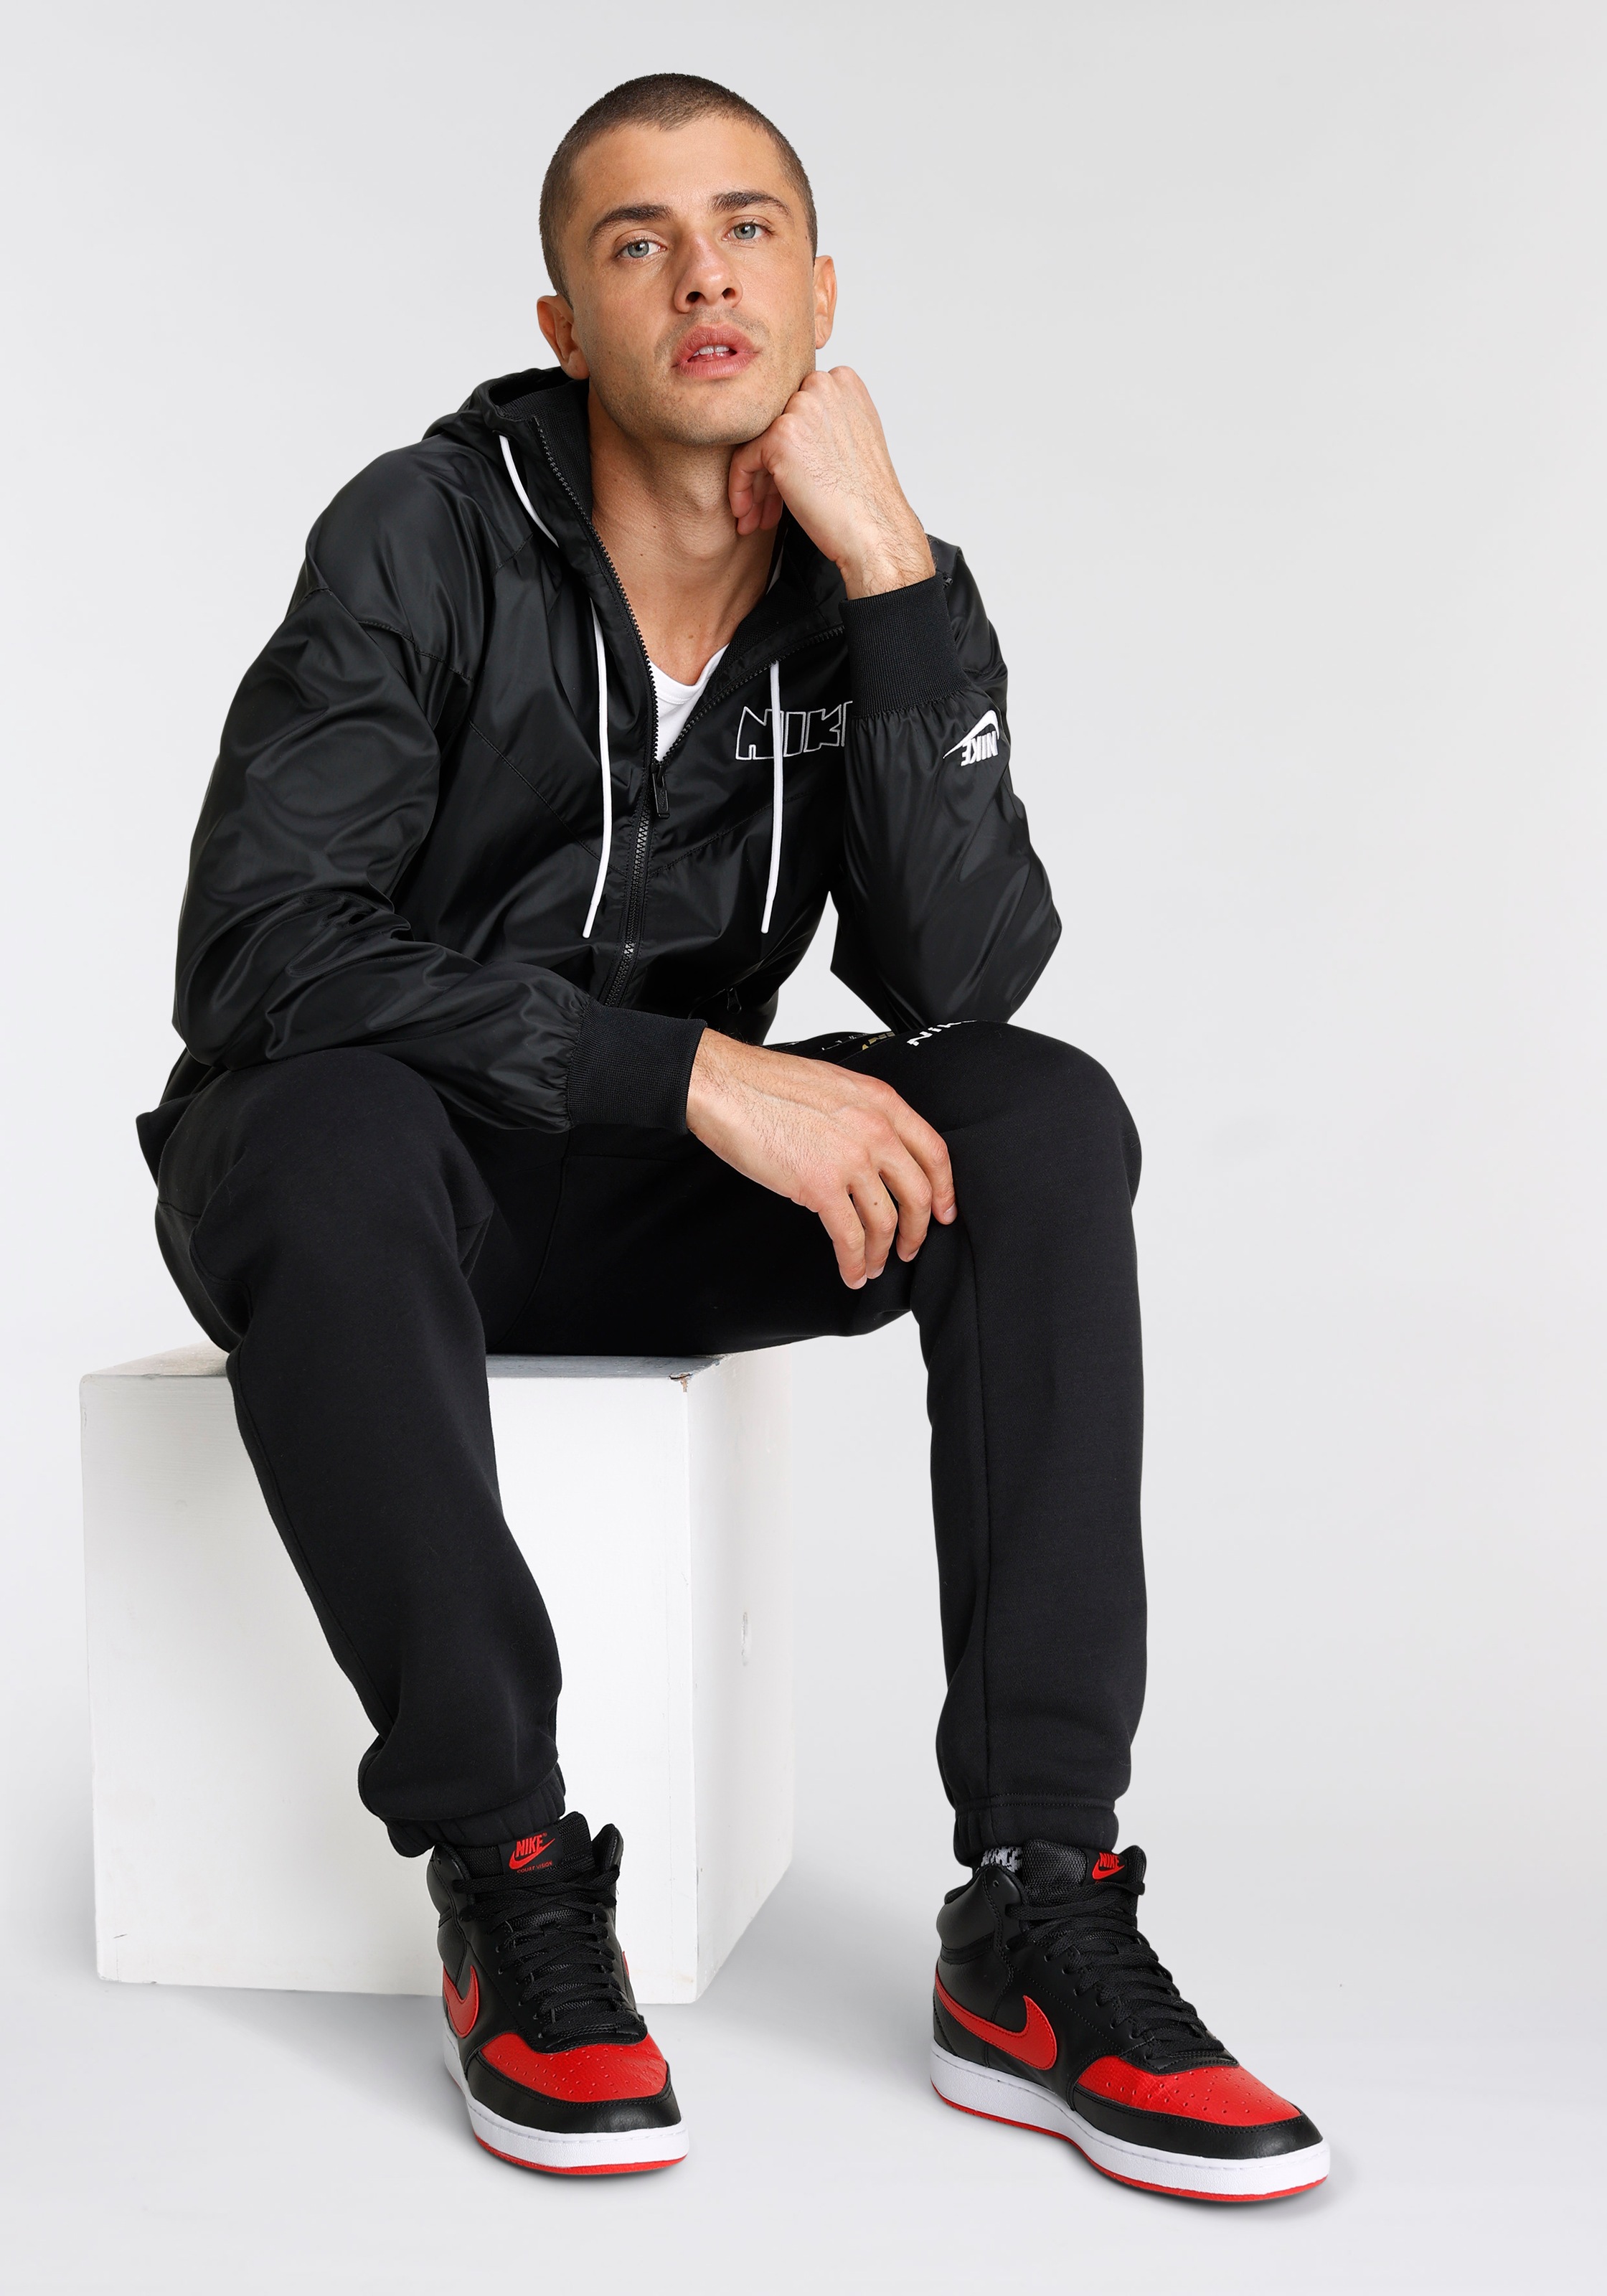 Mode Acheter ligne Air des »COURT confortablement Spuren Nike den en MID«, Sneaker Design Sportswear auf Force VISION 1